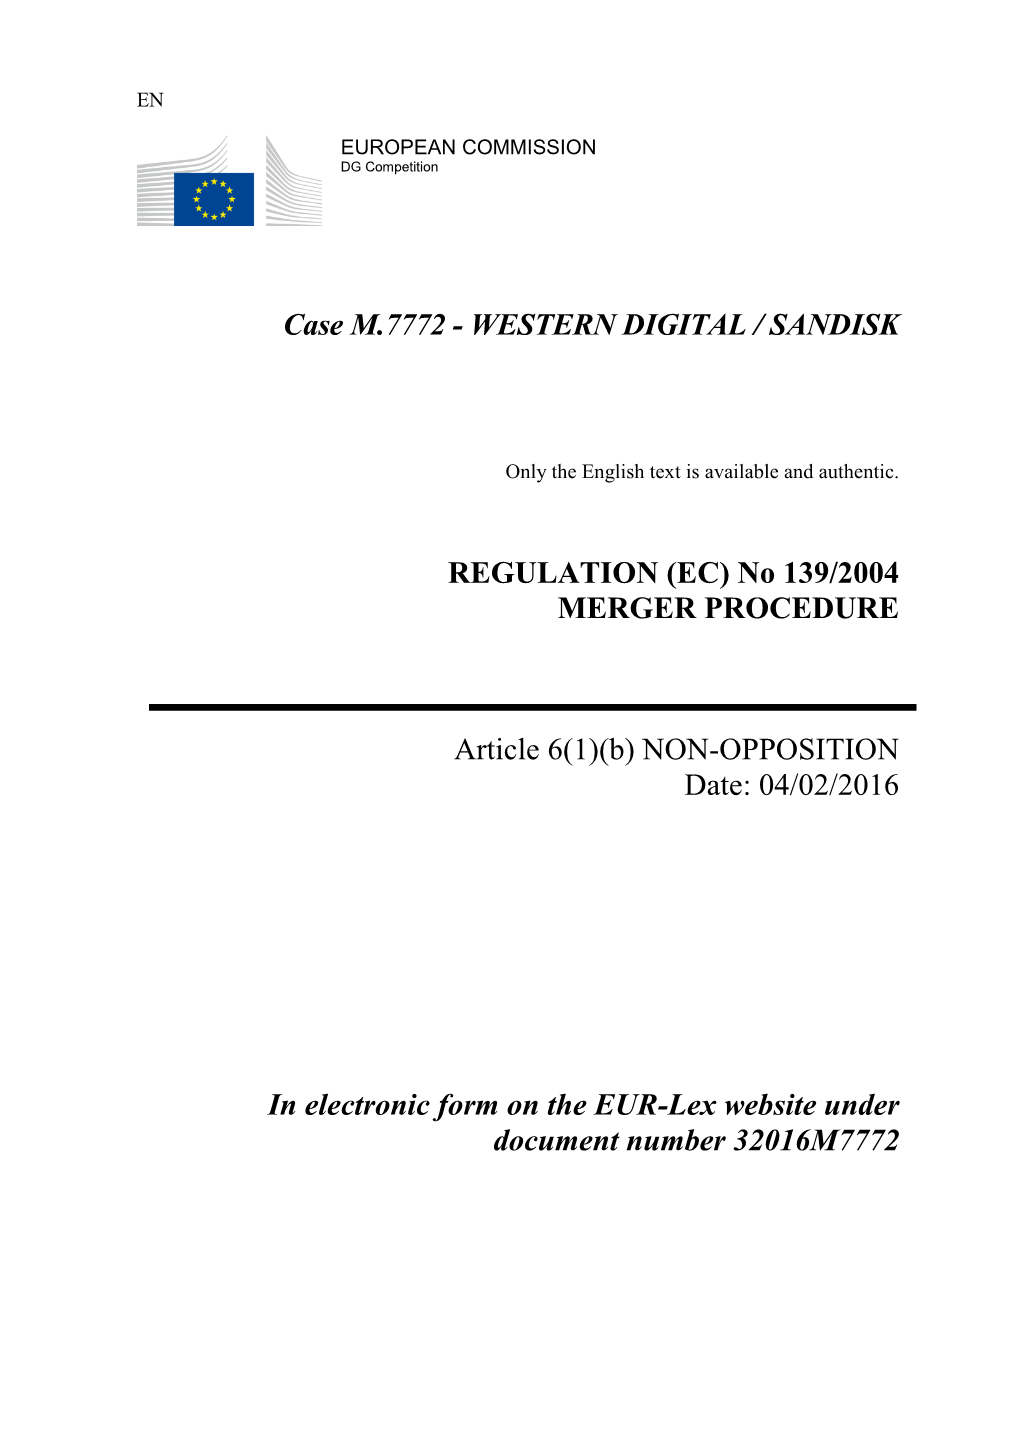 Case M.7772 - WESTERN DIGITAL / SANDISK